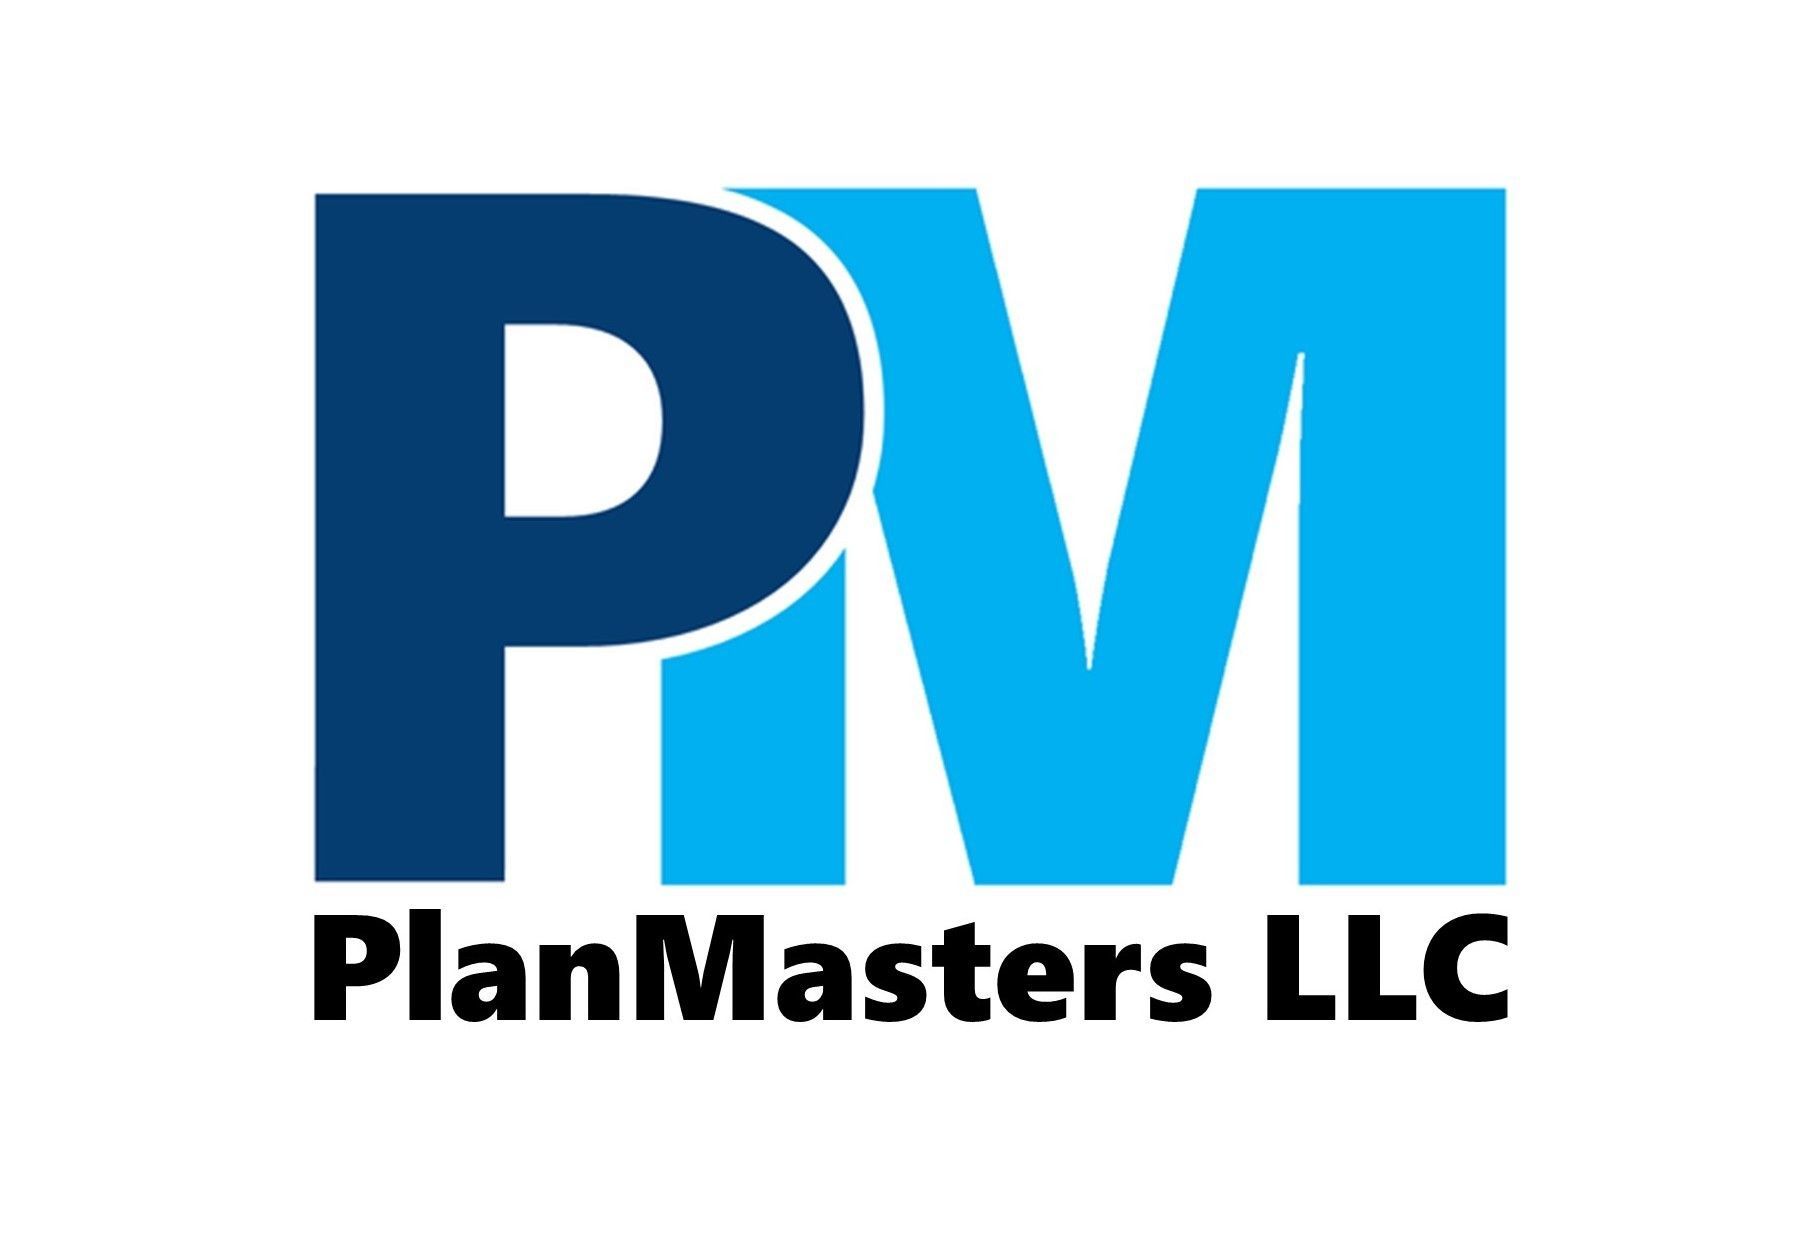 PlanMasters LLC